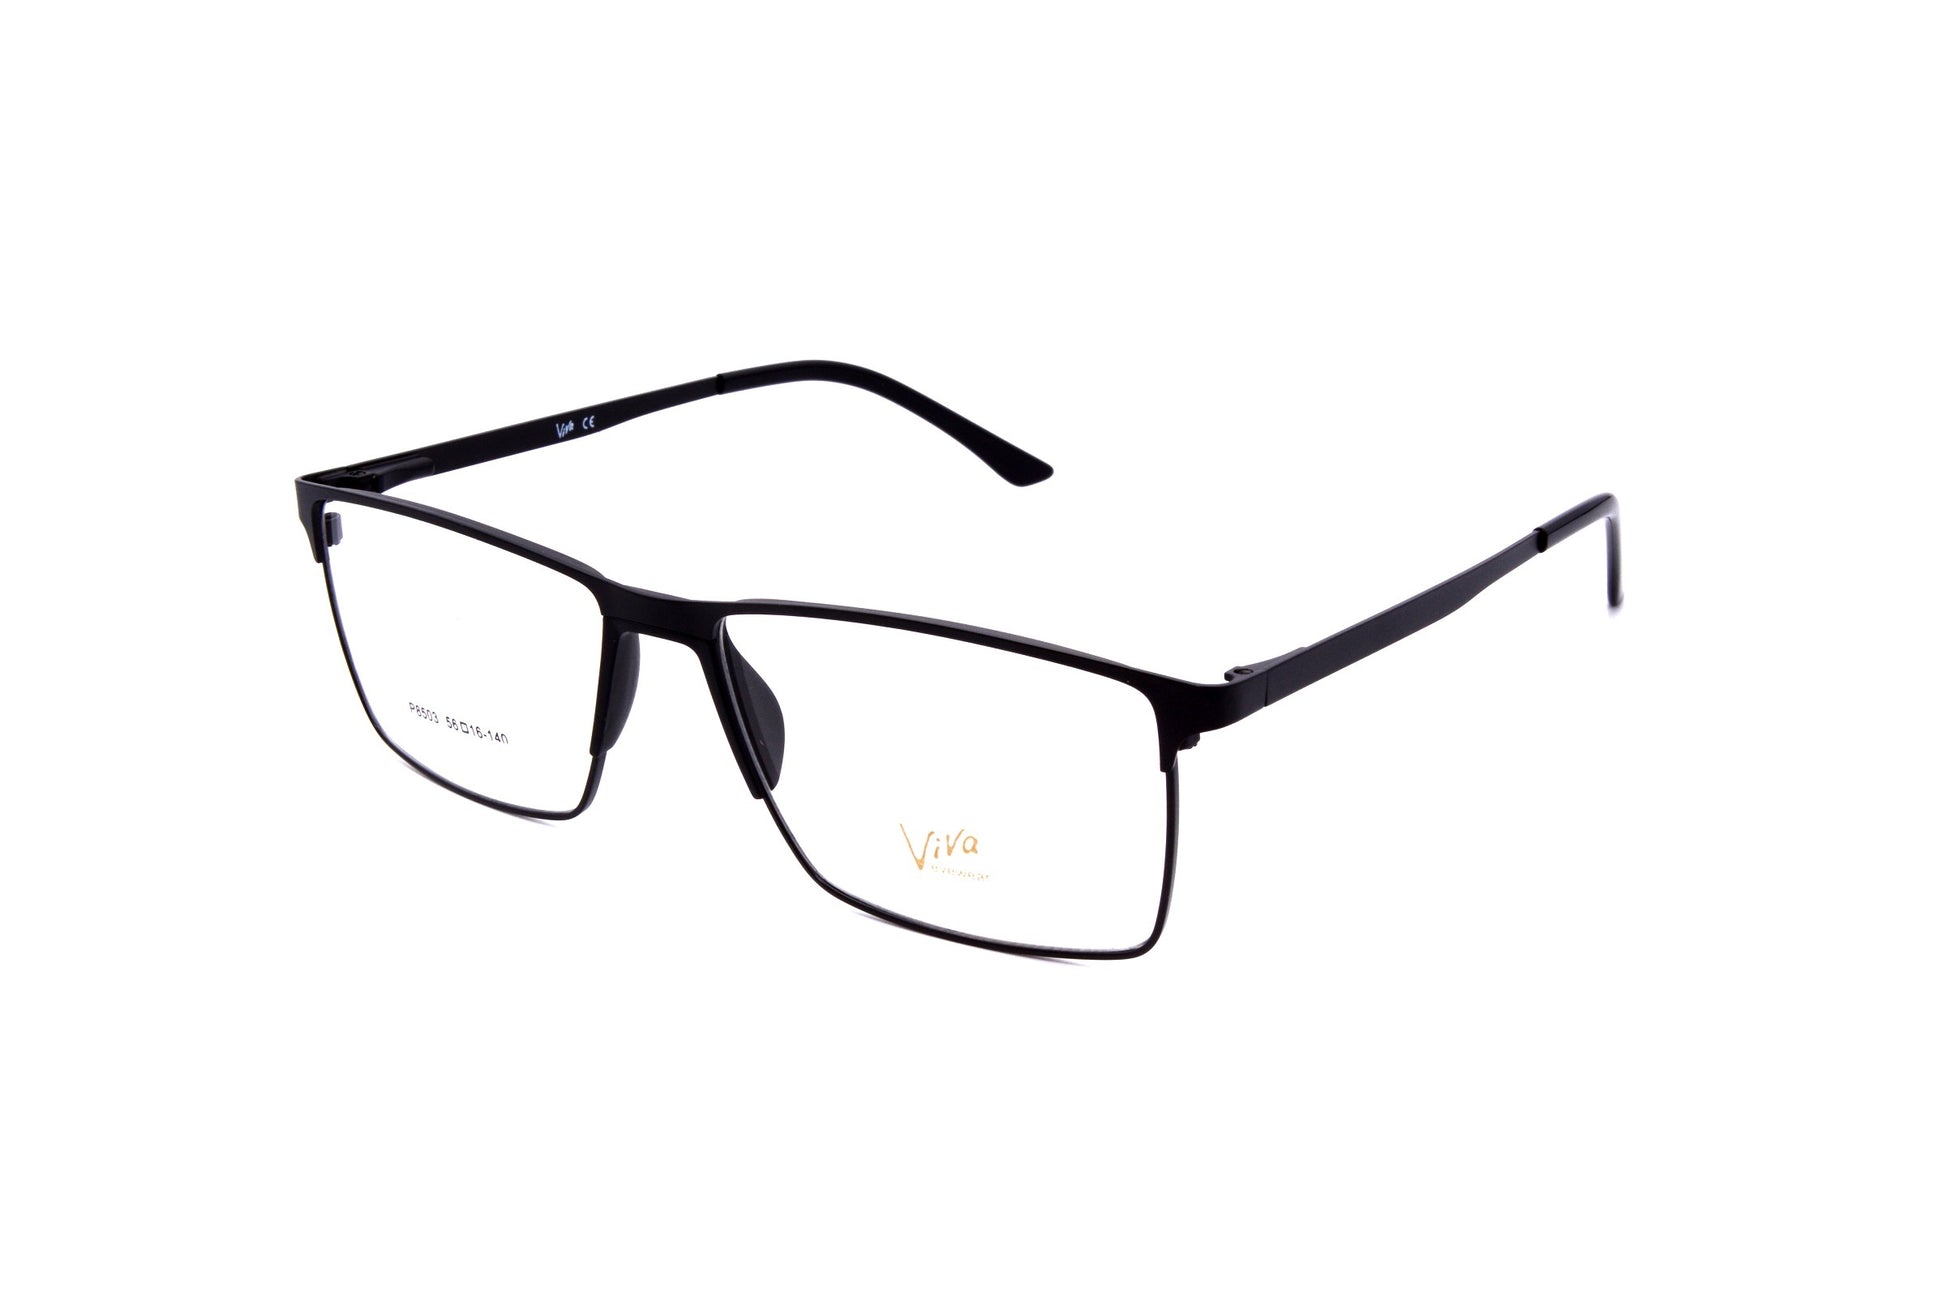 Viva eyewear 8503, M1 - Optics Trading